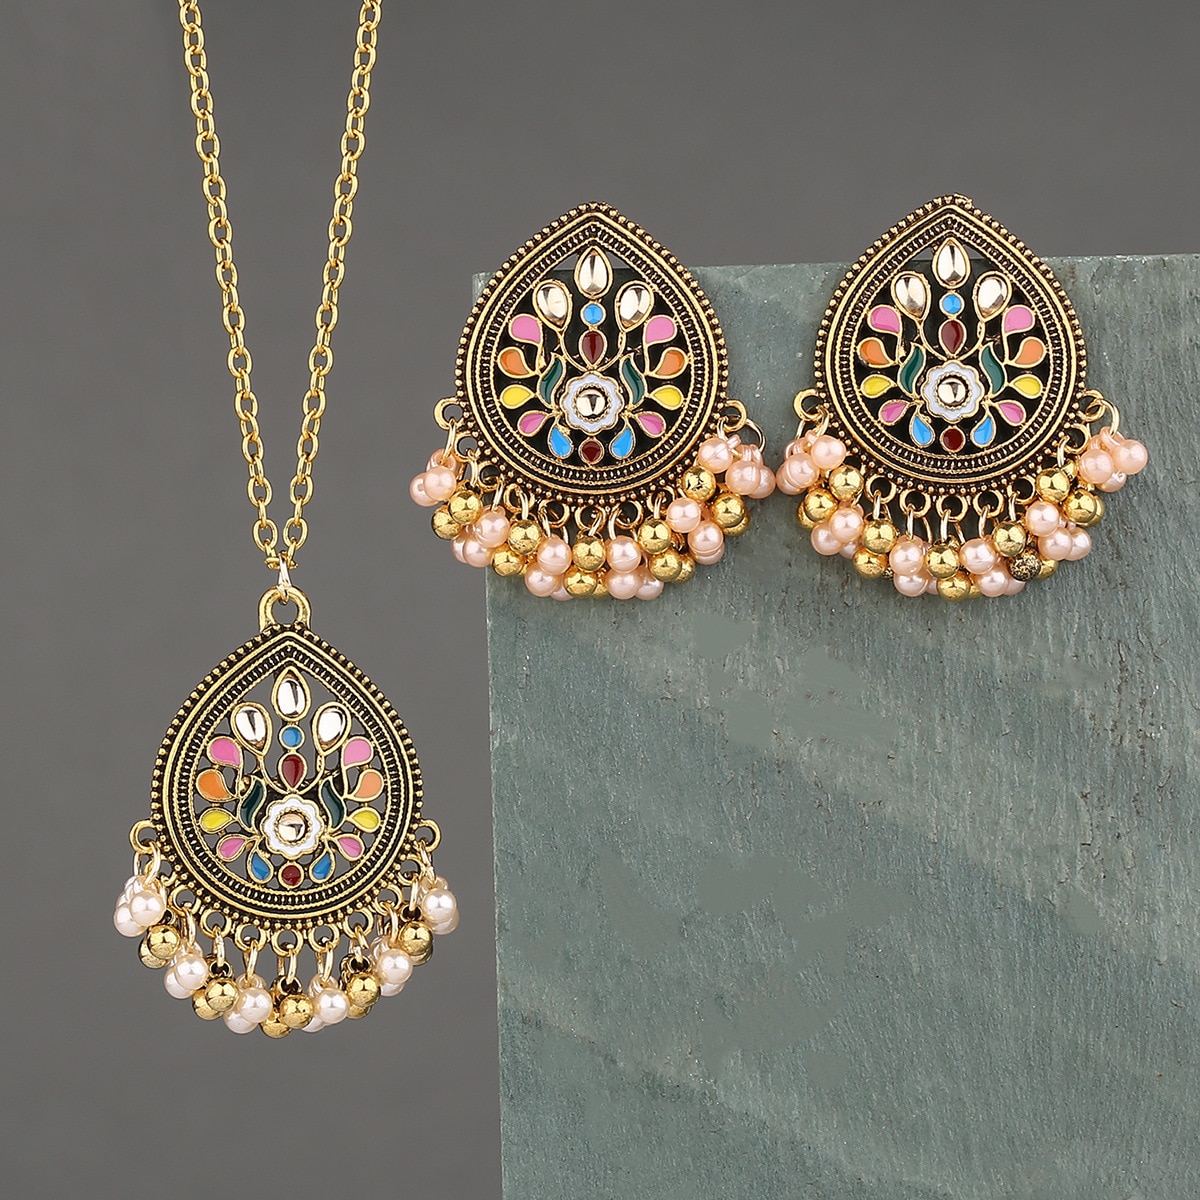 Women39s-Water-Drop-Indian-Jewelry-Set-Gold-Color-EarringNecklace-Set-Bijoux-Pearl-Beads-Wedding-Jew-1005004540815401-3